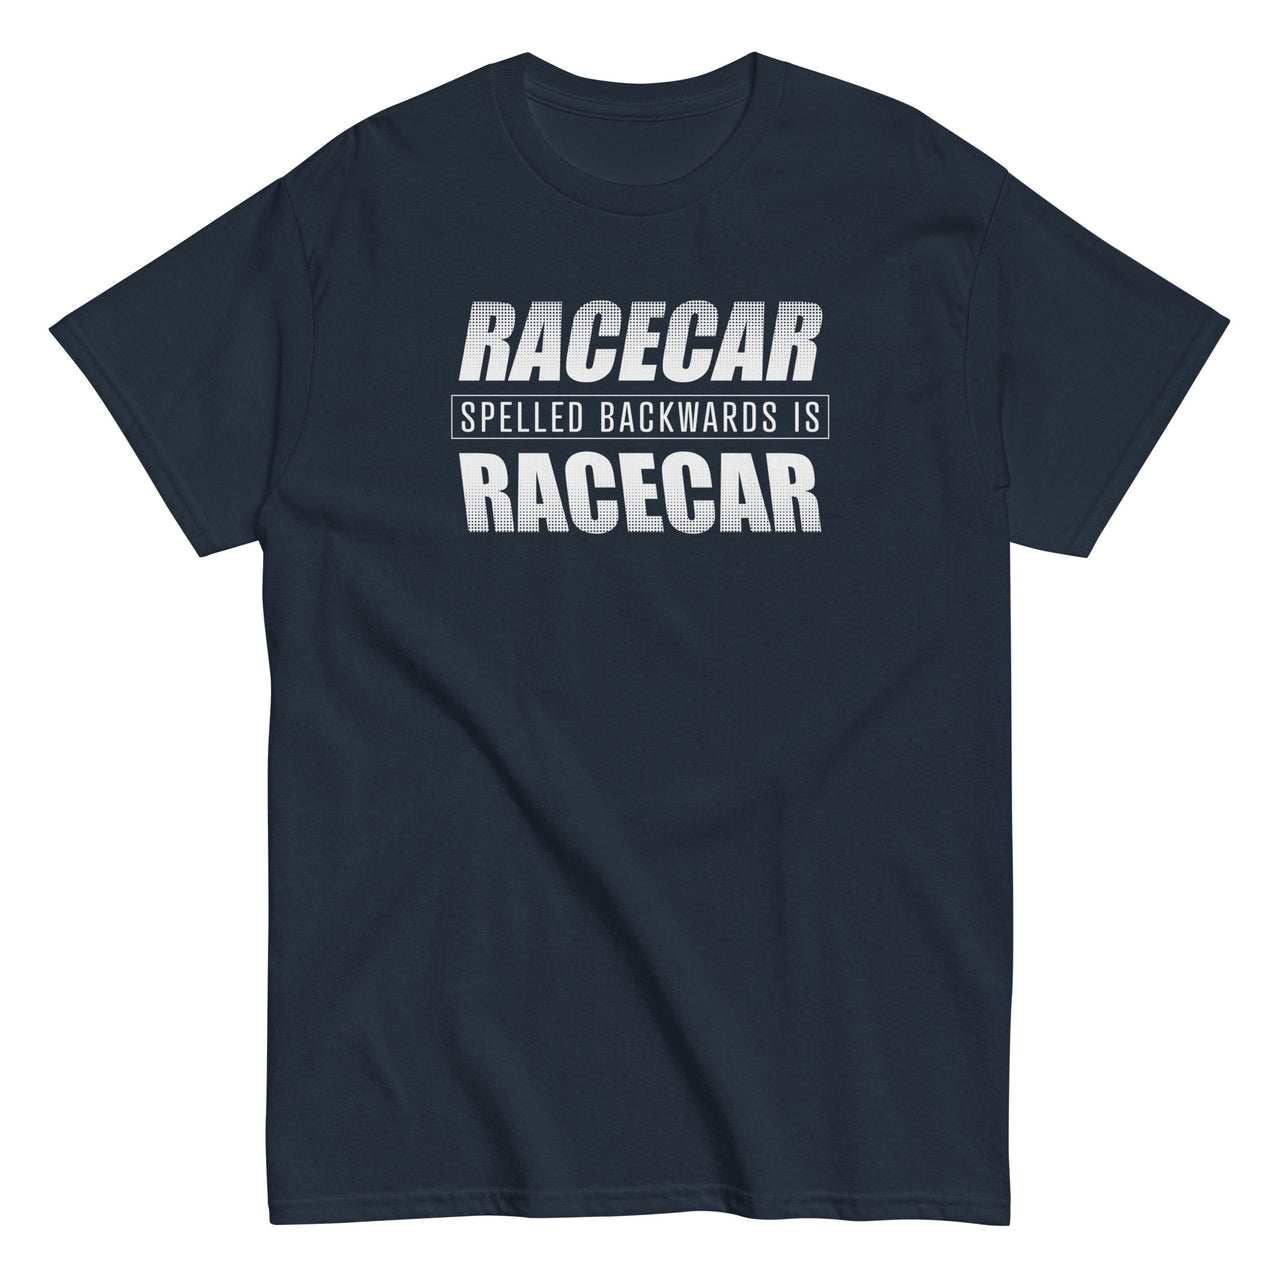 Funny Racecar Shirt, Car Enthusiast Gift, Drag Racing, or Racecar T-Shirt in navy